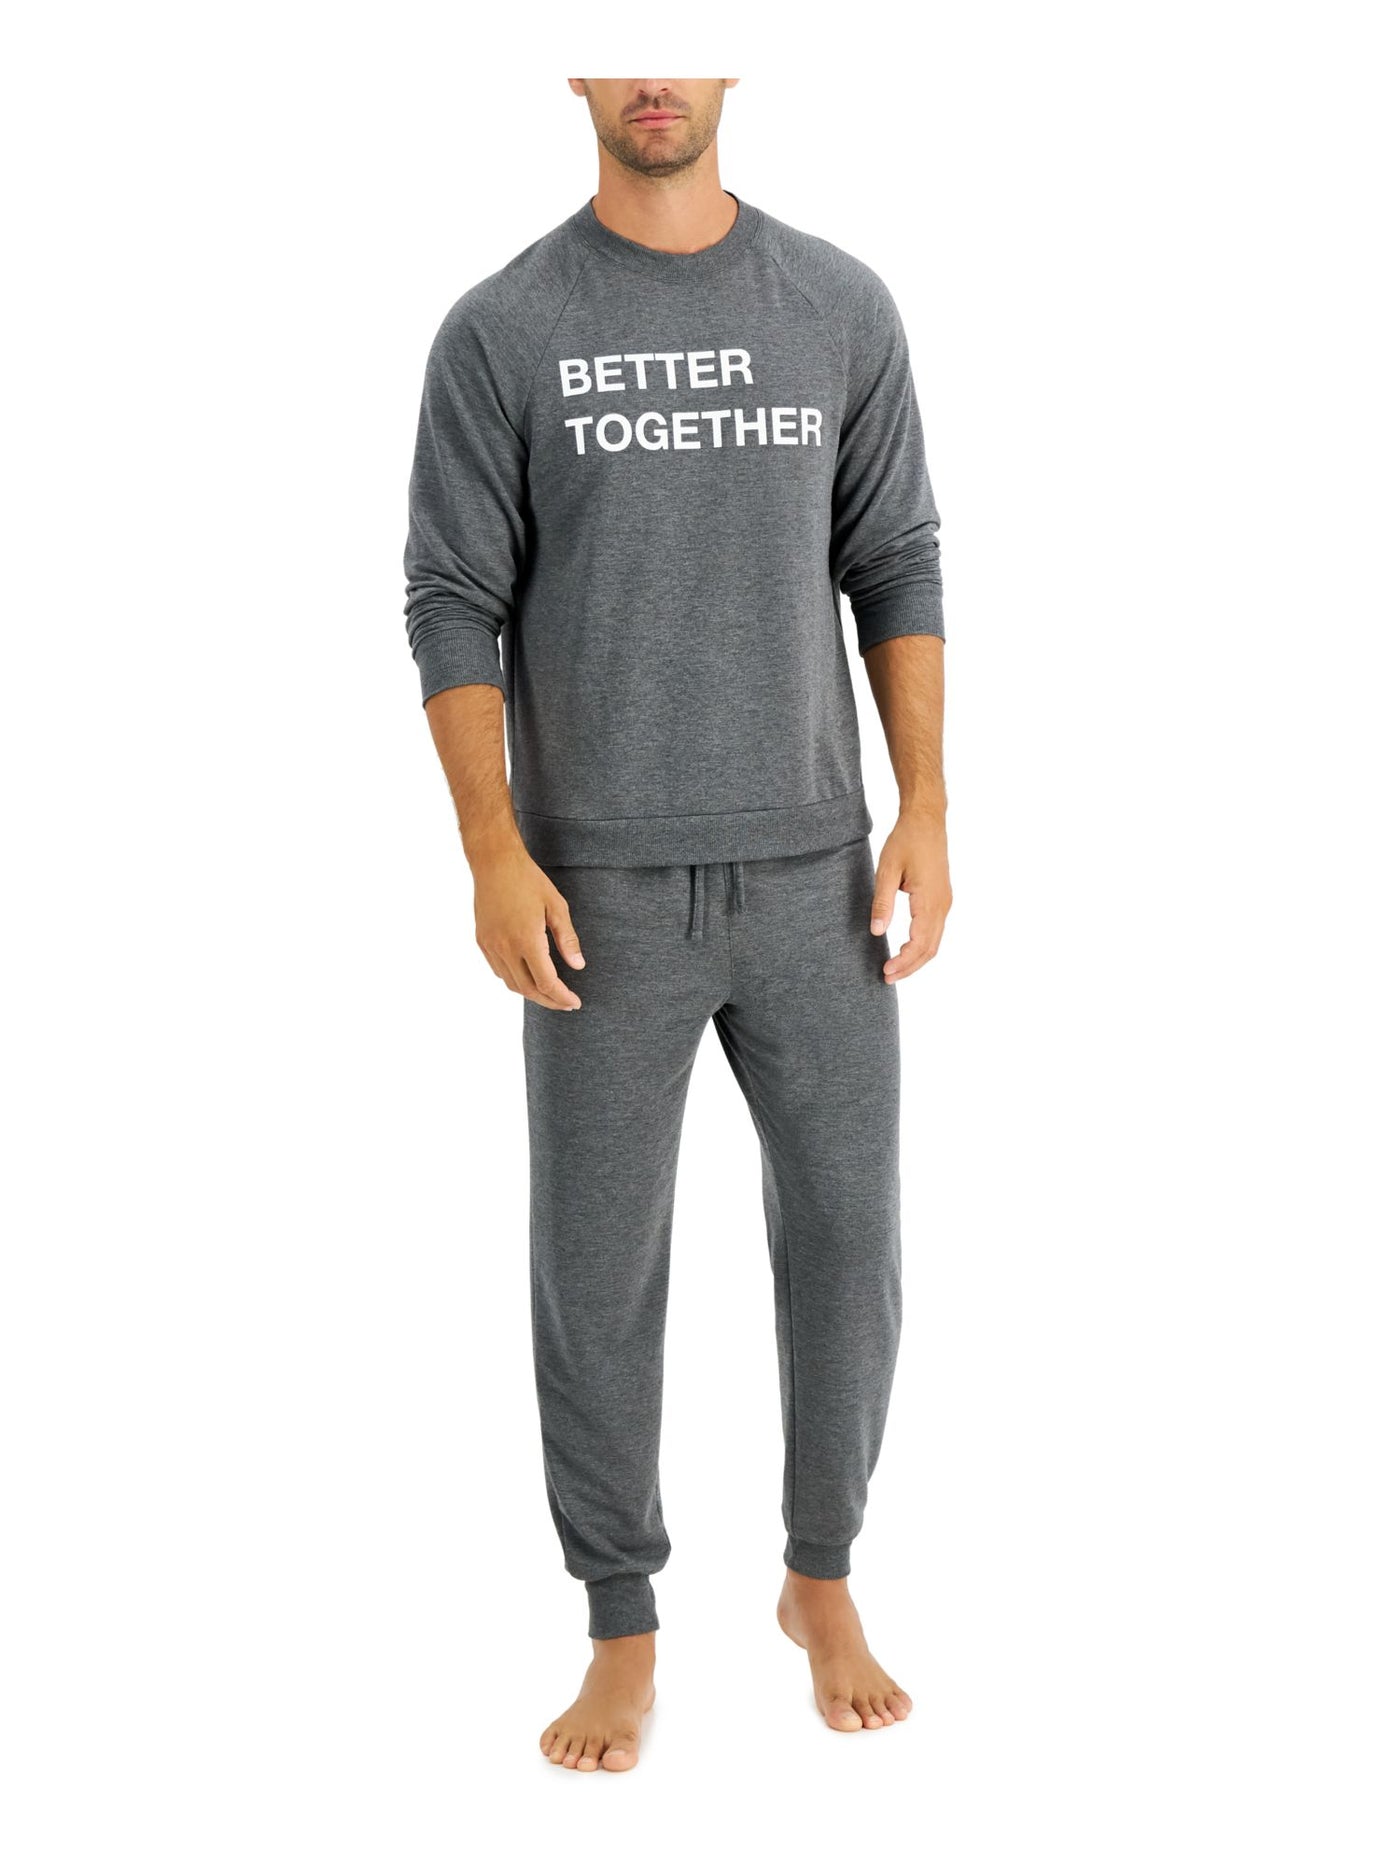 FAMILY PJs Mens Gray Graphic Drawstring T-Shirt Top Cuffed Pants Pajamas XXL